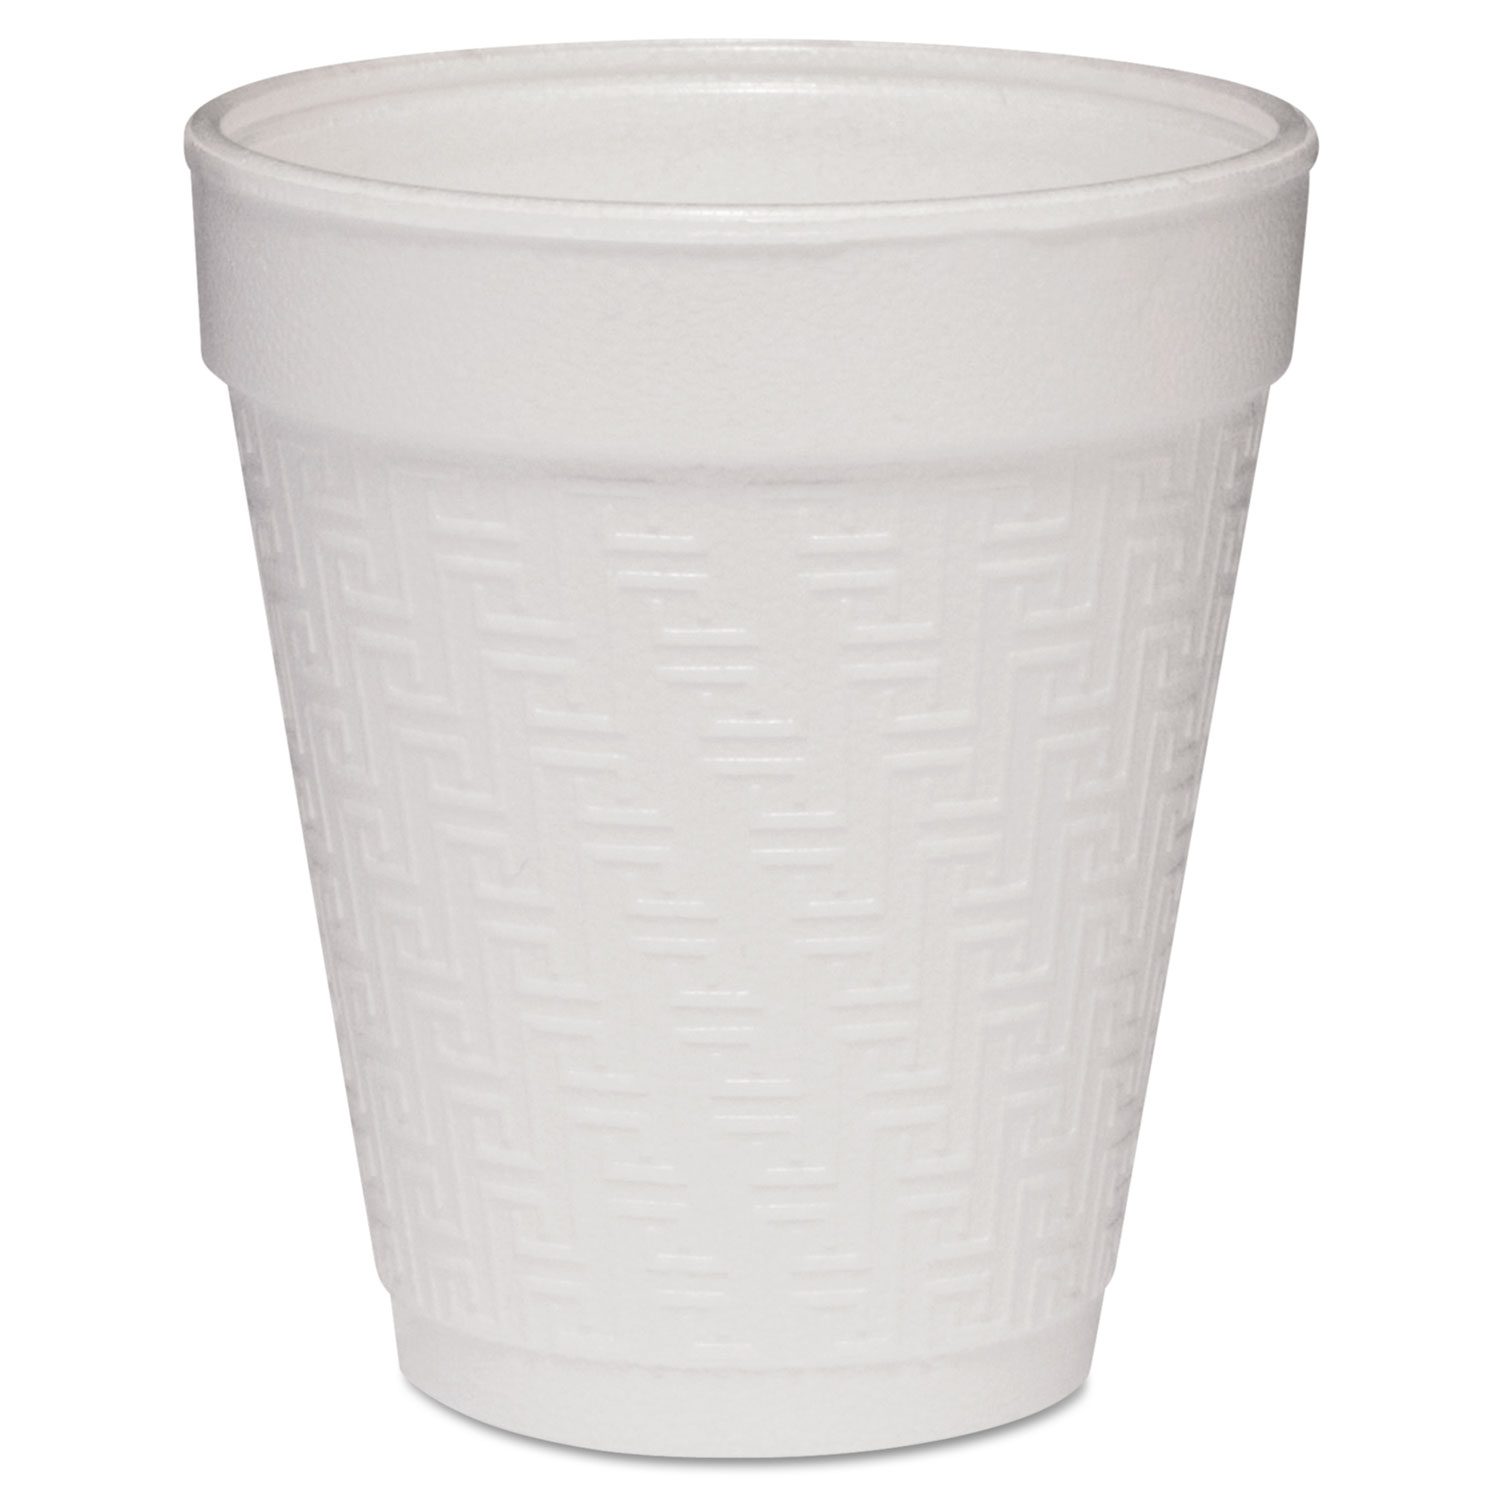  Dart 8KY8 Small Foam Drink Cup, 8oz, Hot/Cold, White w/Greek Key Design, 25/Bag, 40Bg/Ctn (DCC8KY8) 